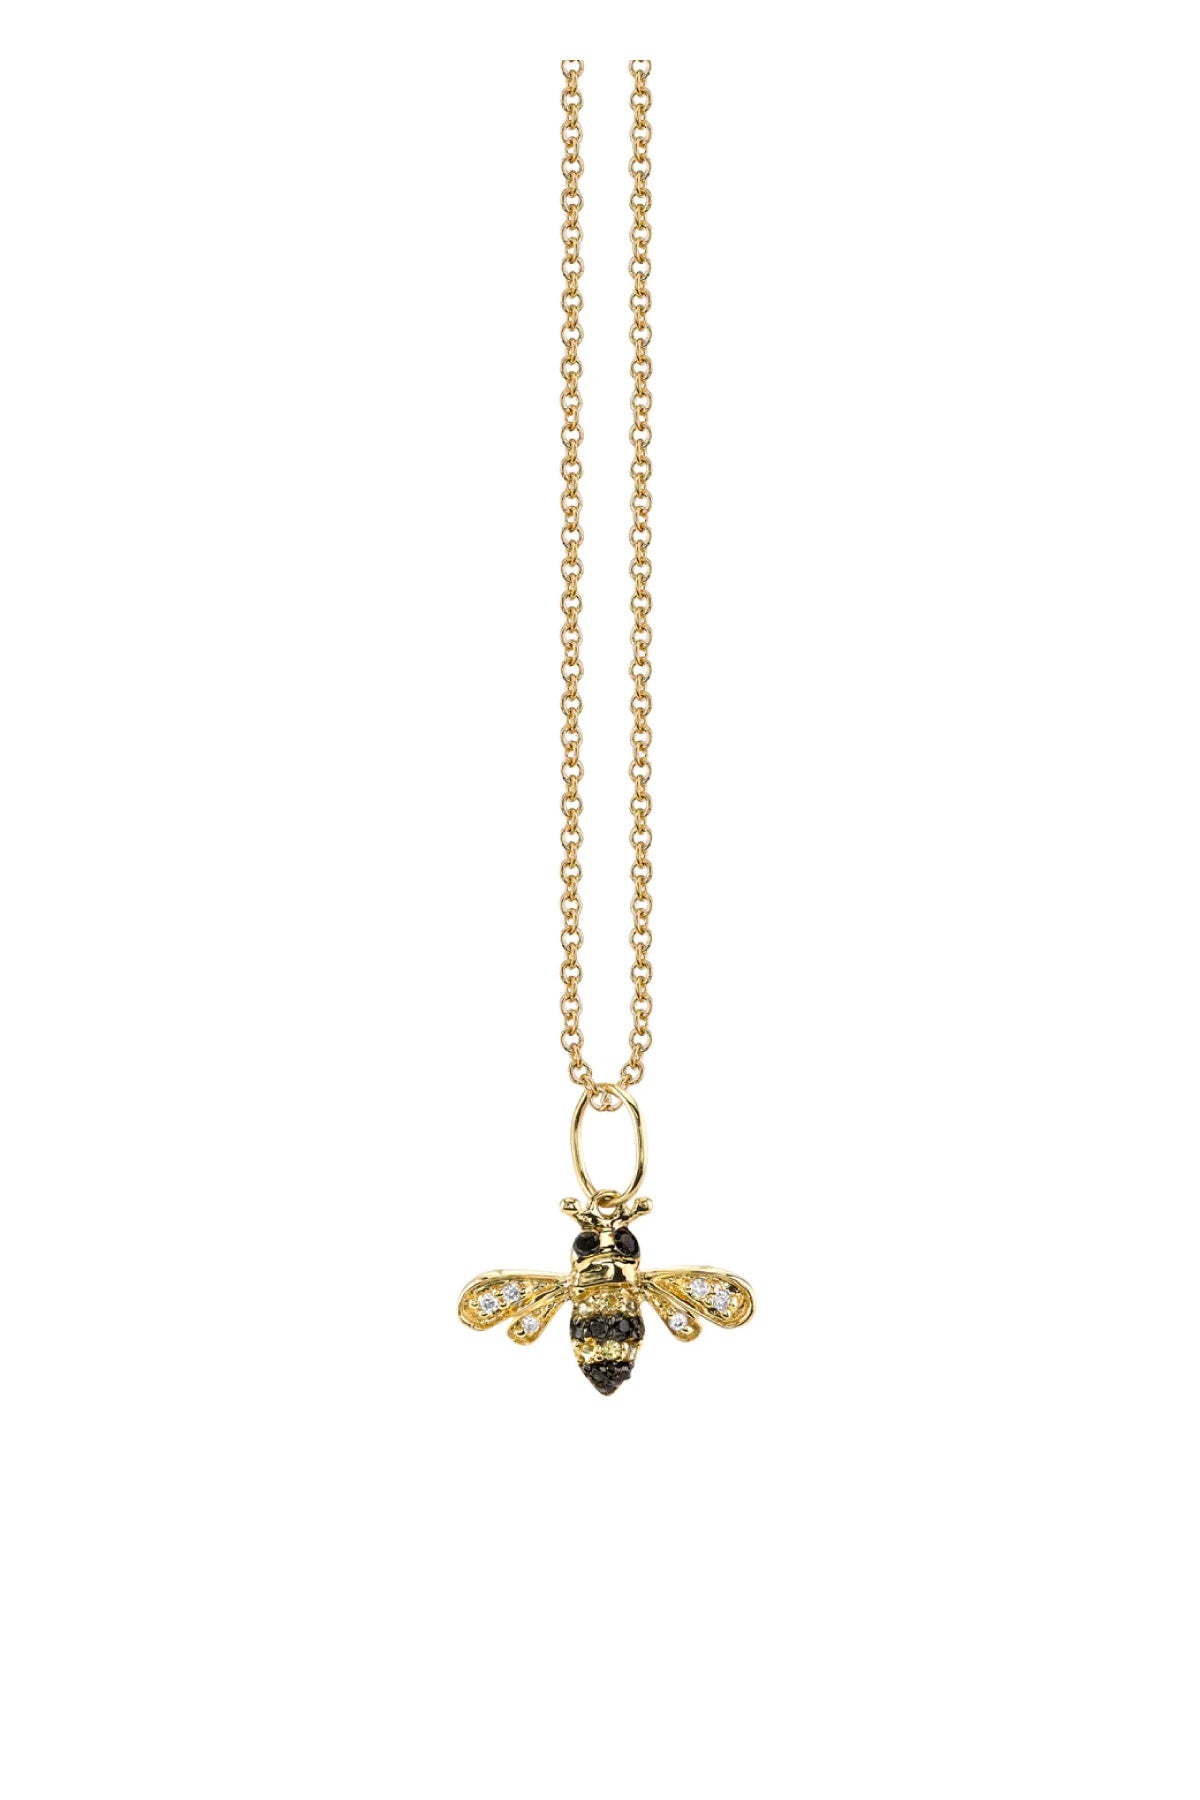 Sydney Evan Small Diamond Bee Charm Necklace - Yellow Gold